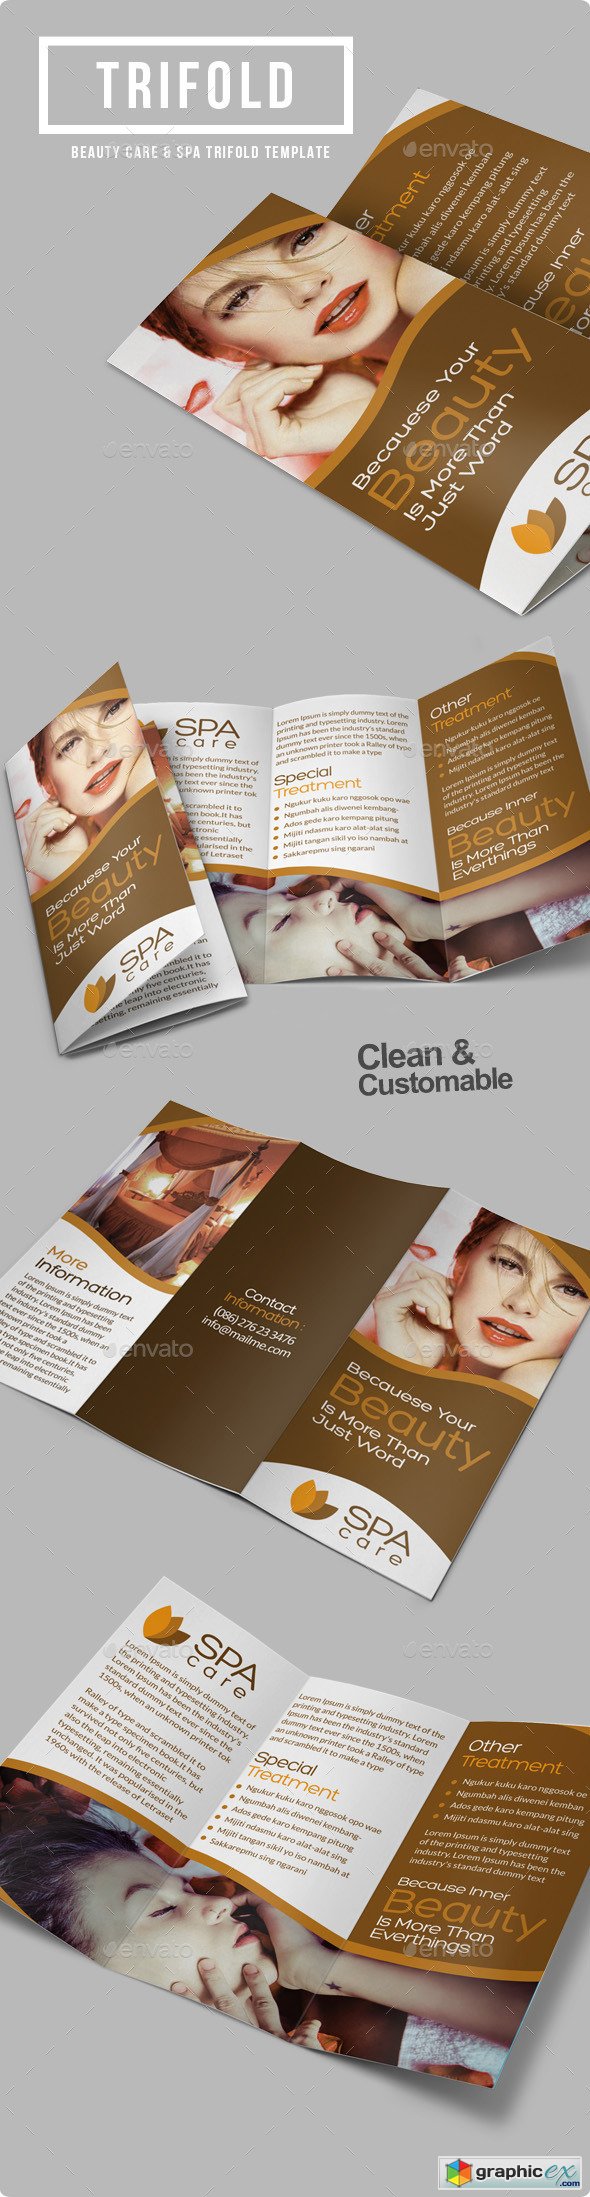 Beauty Care Spa Trifold Brochure